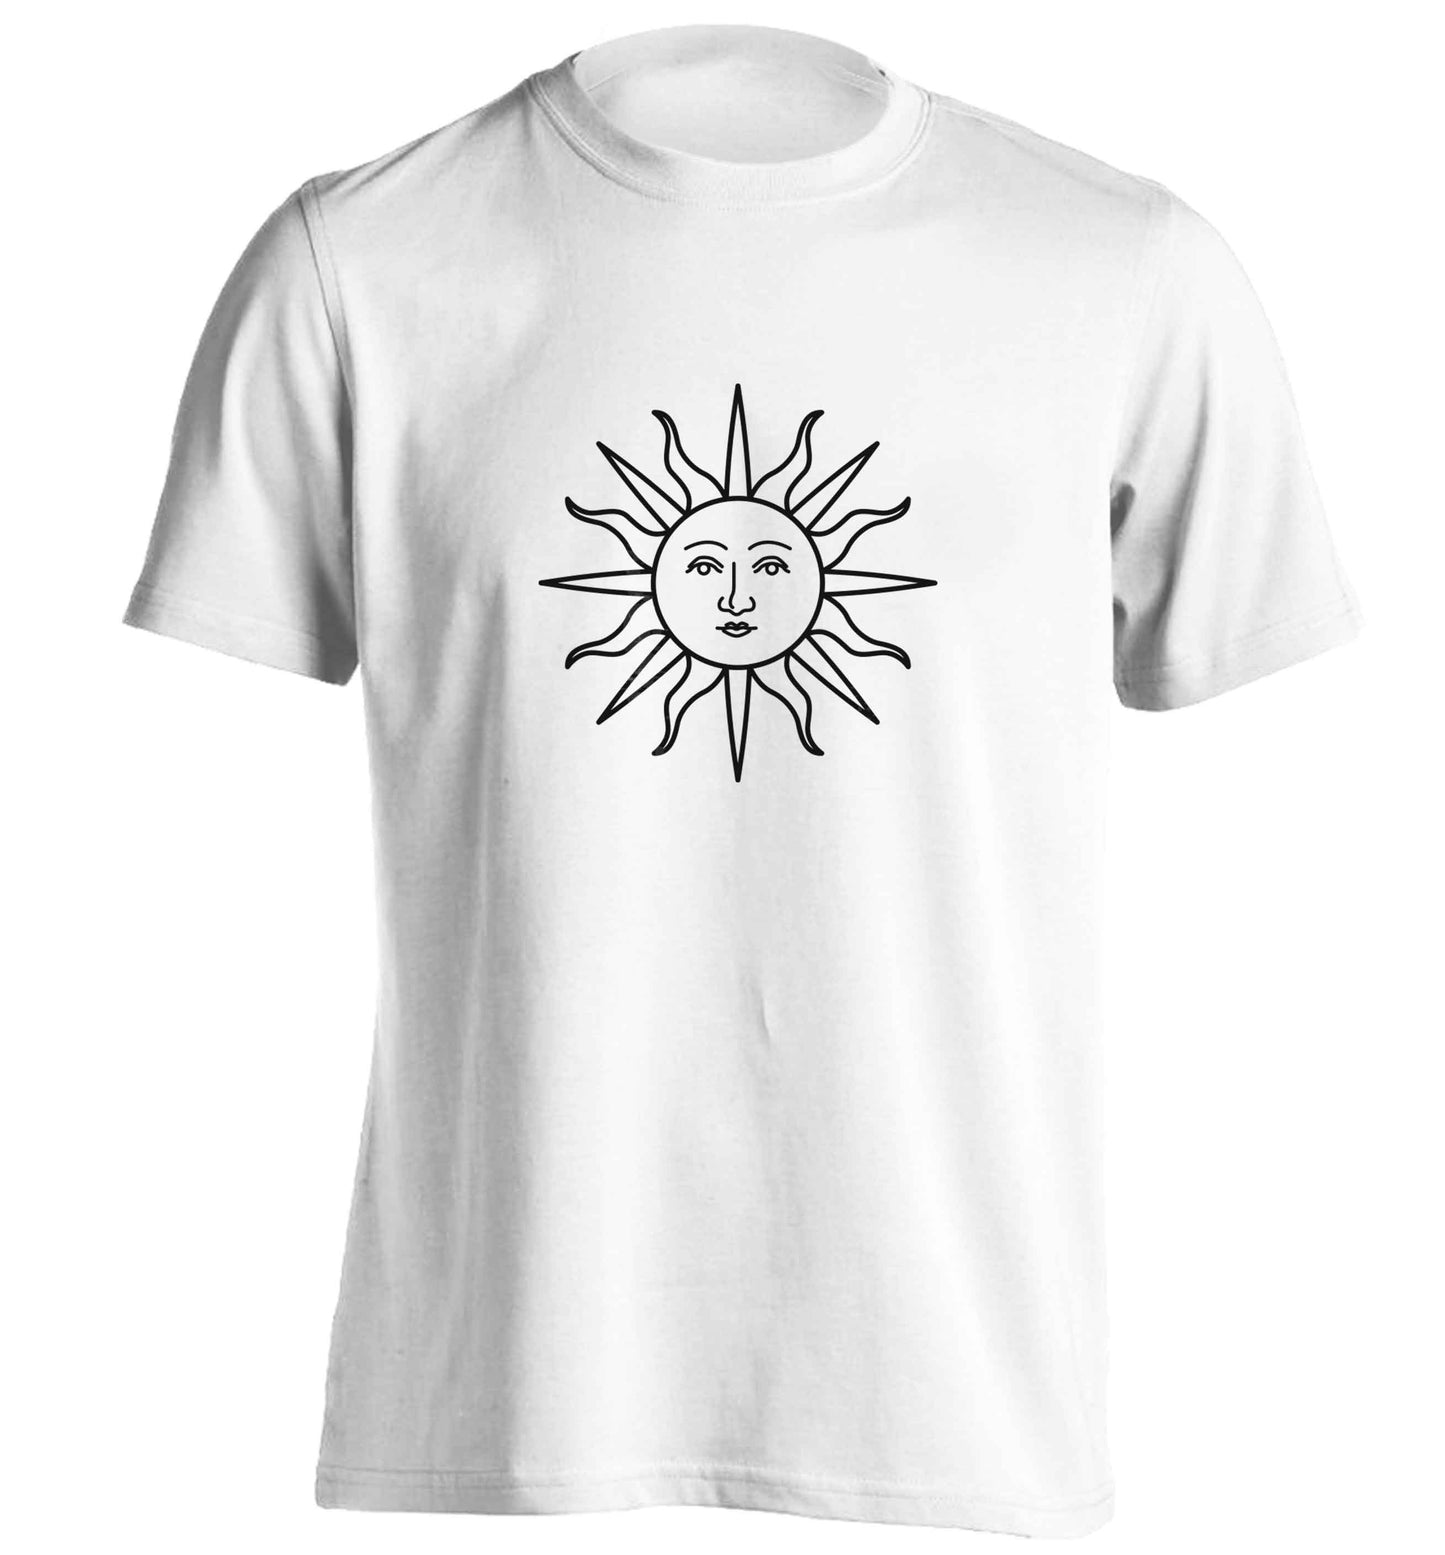 Sun face illustration adults unisex white Tshirt 2XL